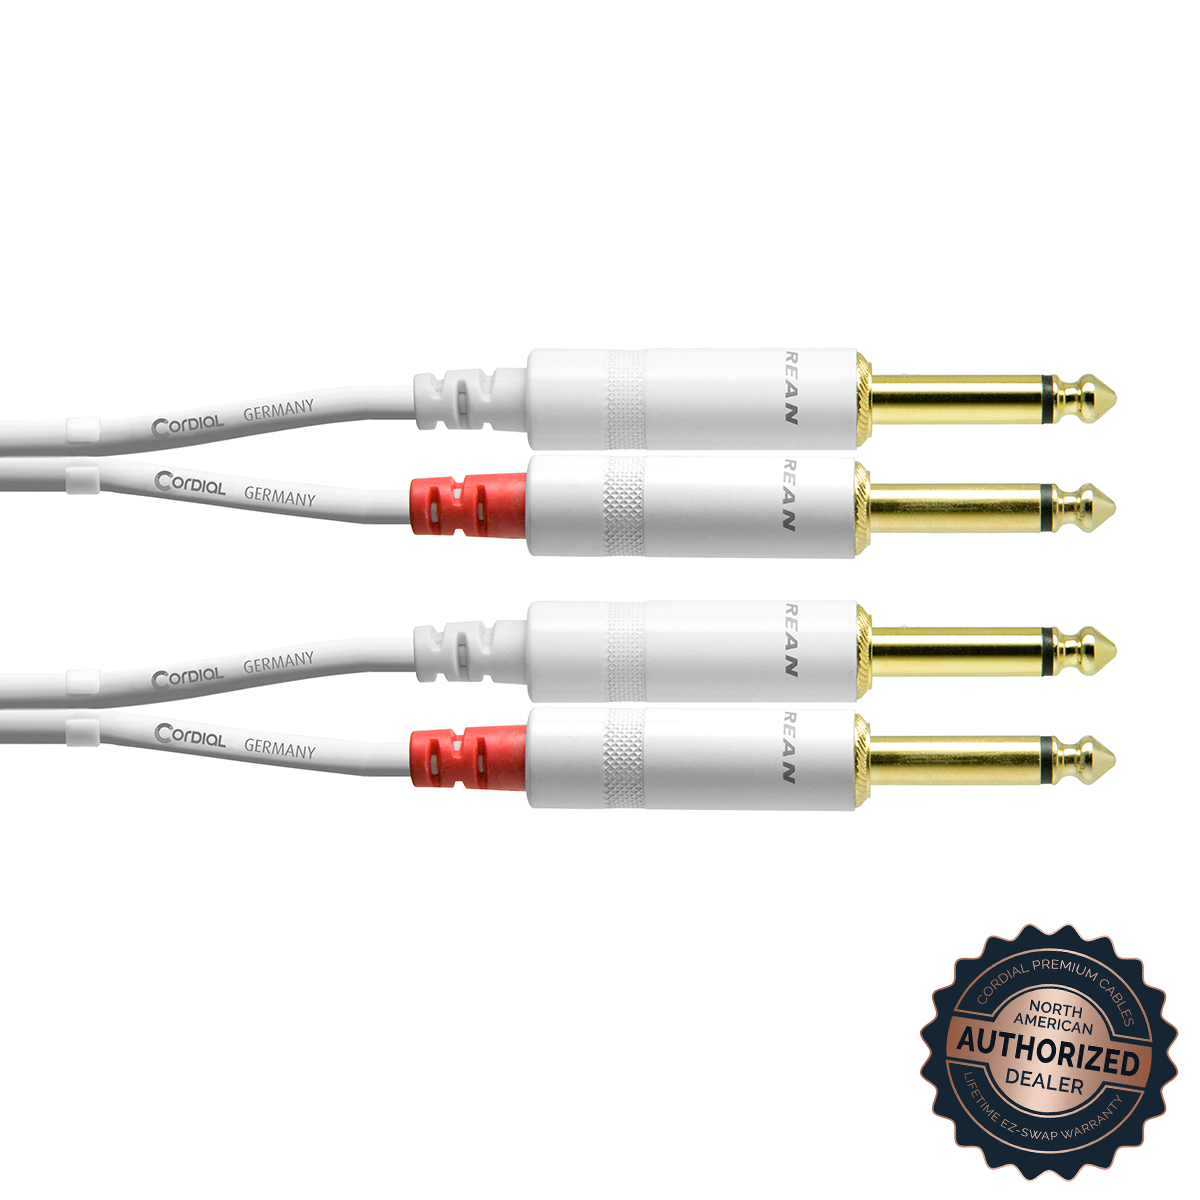 Cordial Unbalanced Dual-Mono Cable; White, 20ft.

SKU: CFU 6 PP - SNOW

(2x) 1/4" TS Male to (2x) 1/4" TS Male; White, 20ft. 